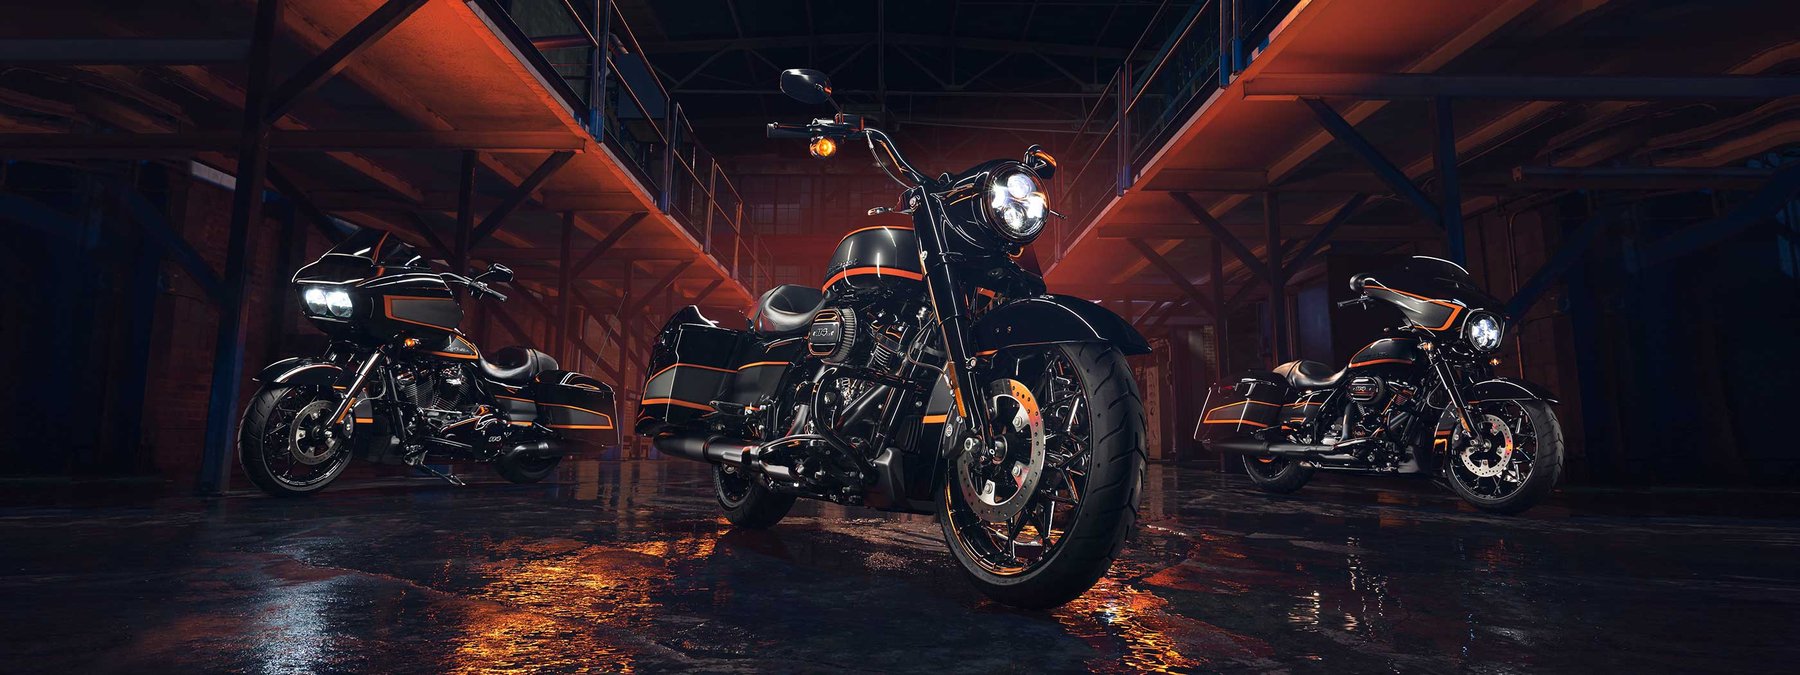 Apex custom lak på Harley-Davidson motorcykler